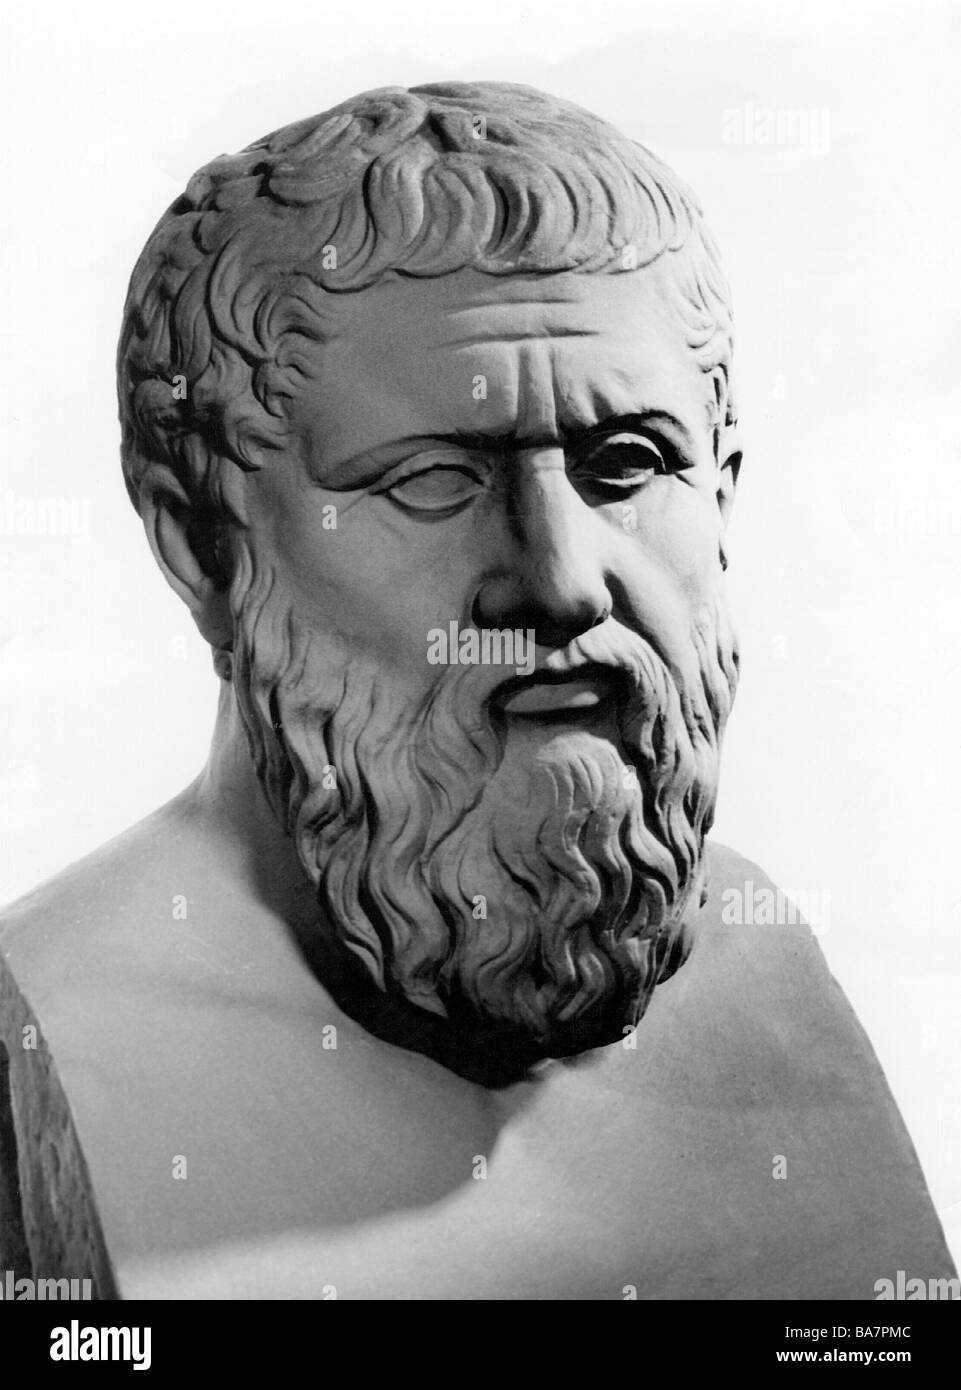 Plato Biography - YouTube